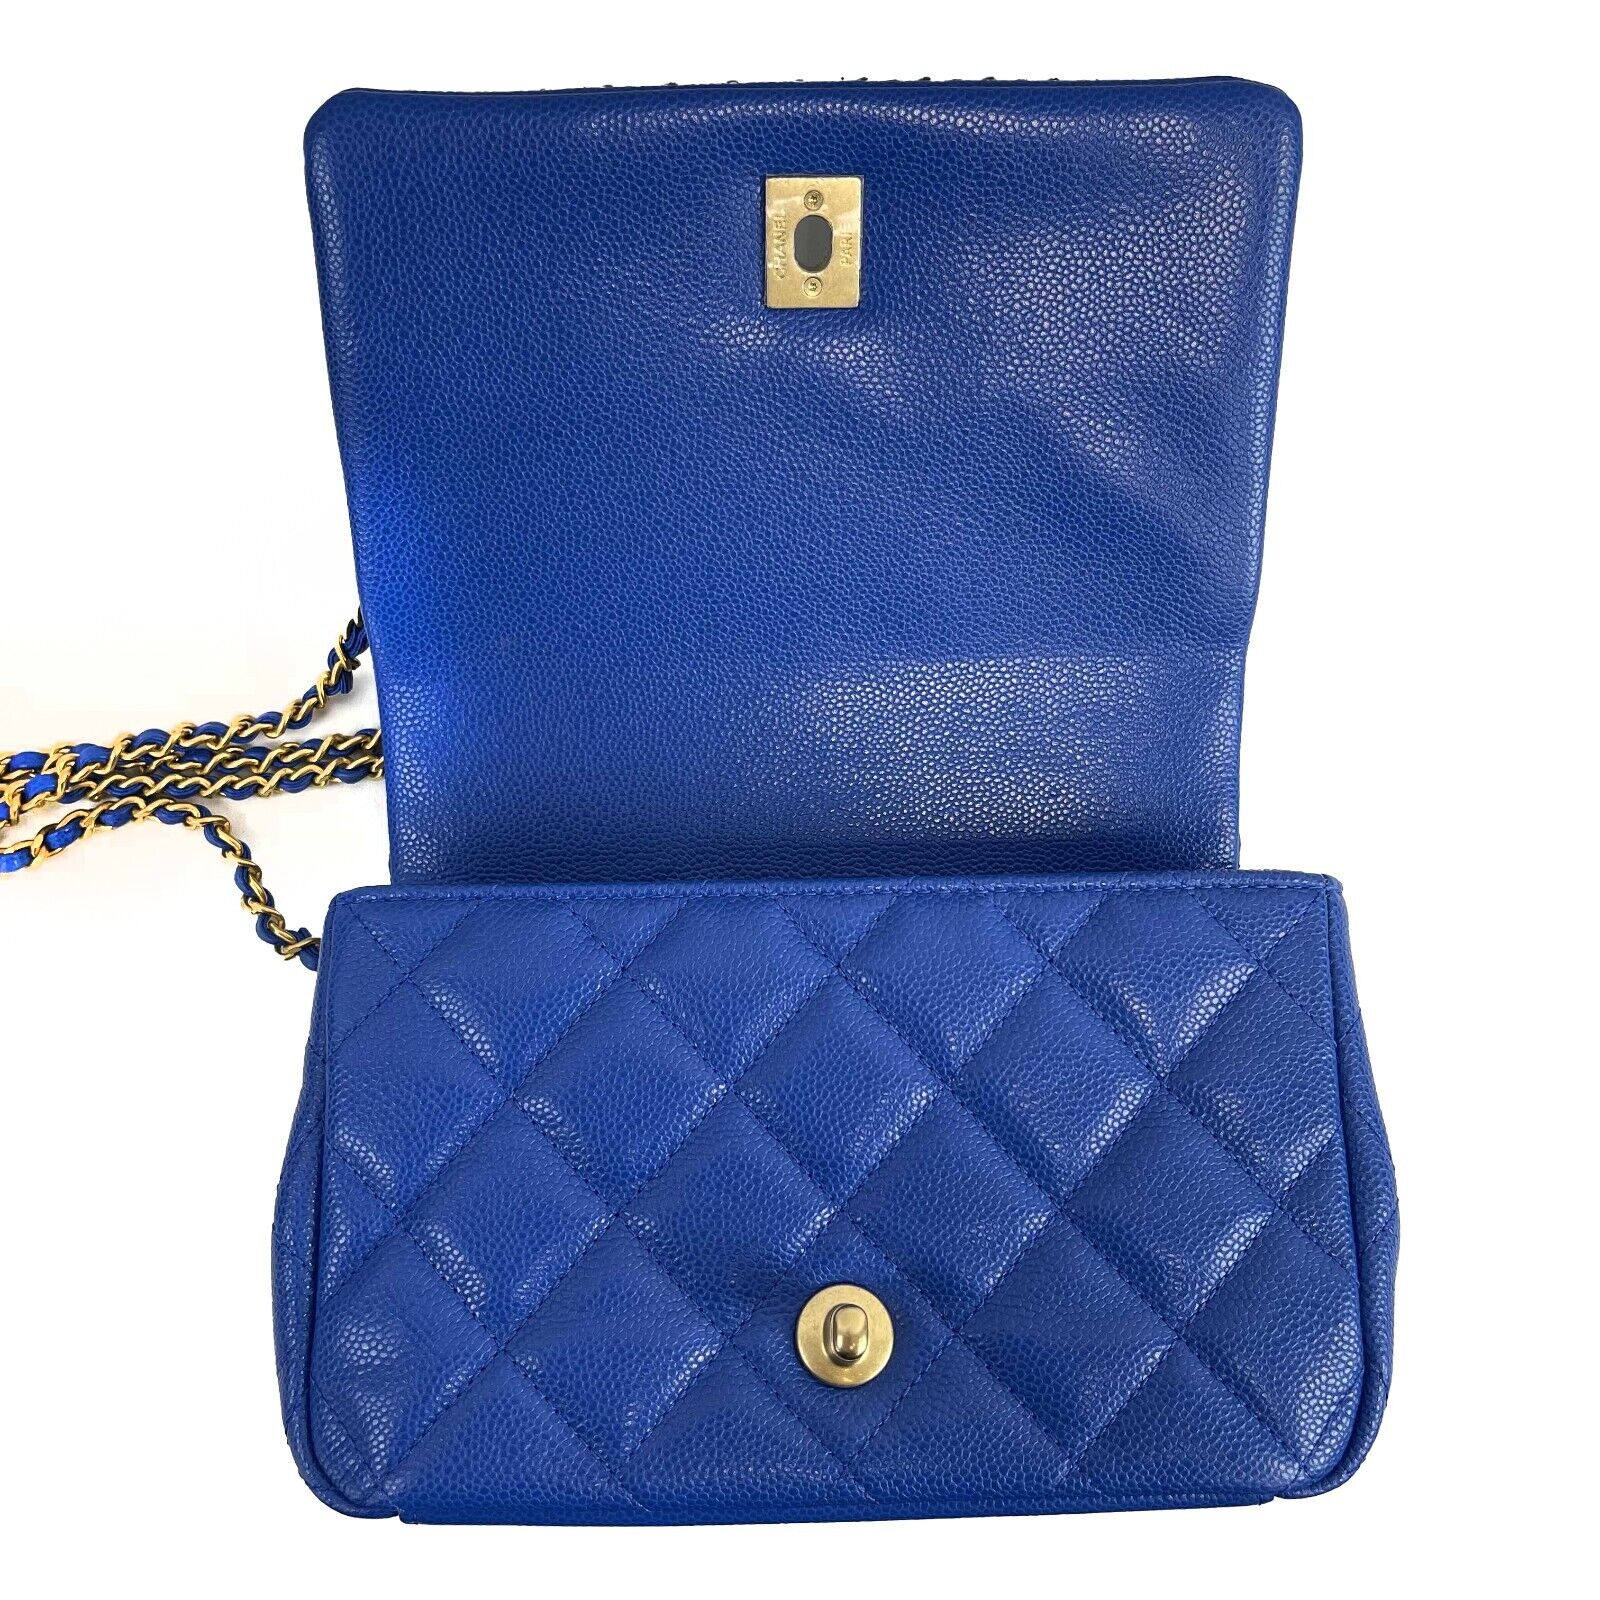 blue chanel mini flap handbag